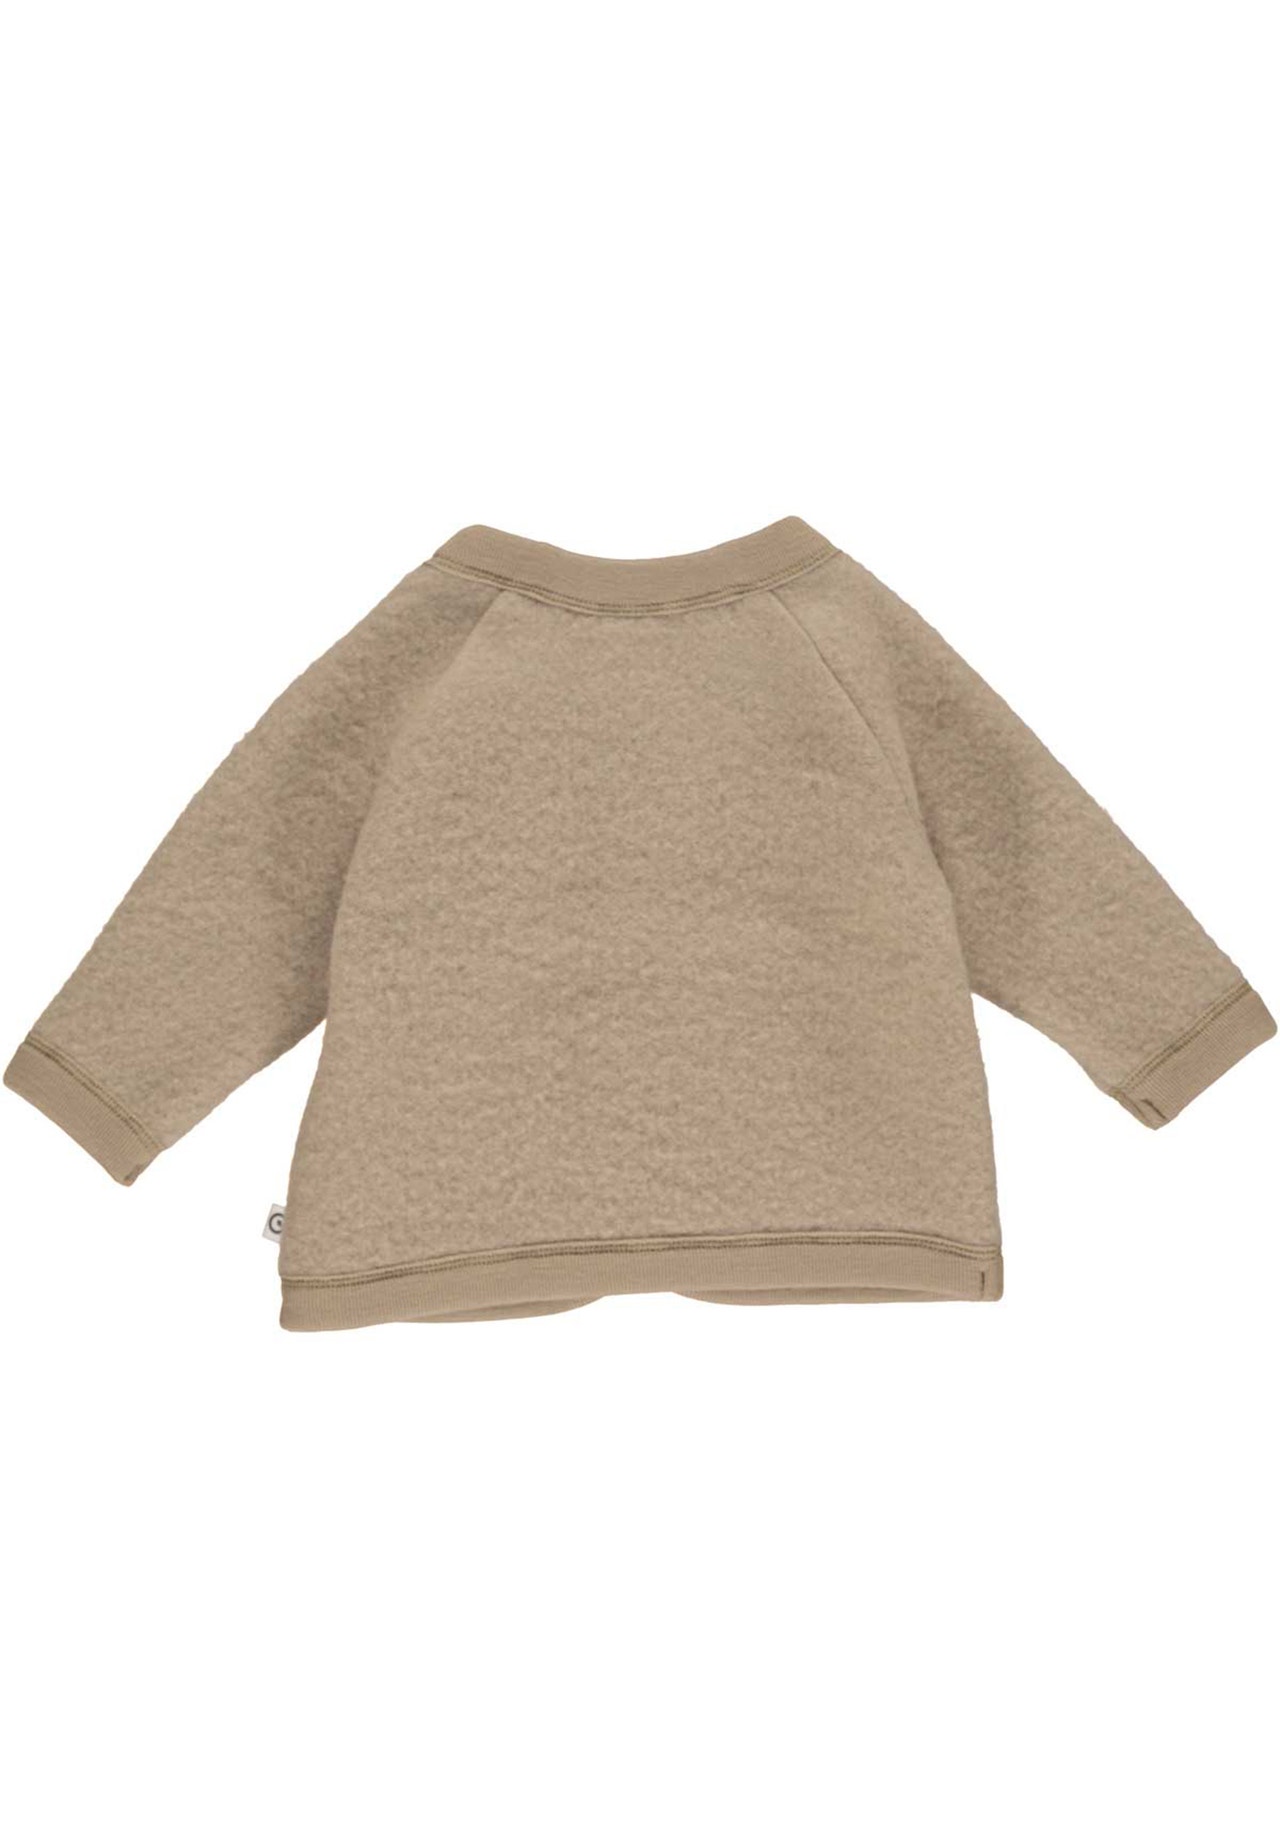 MAMA.LICIOUS Wolle baby-fleecejacke -Seed - 1542003300